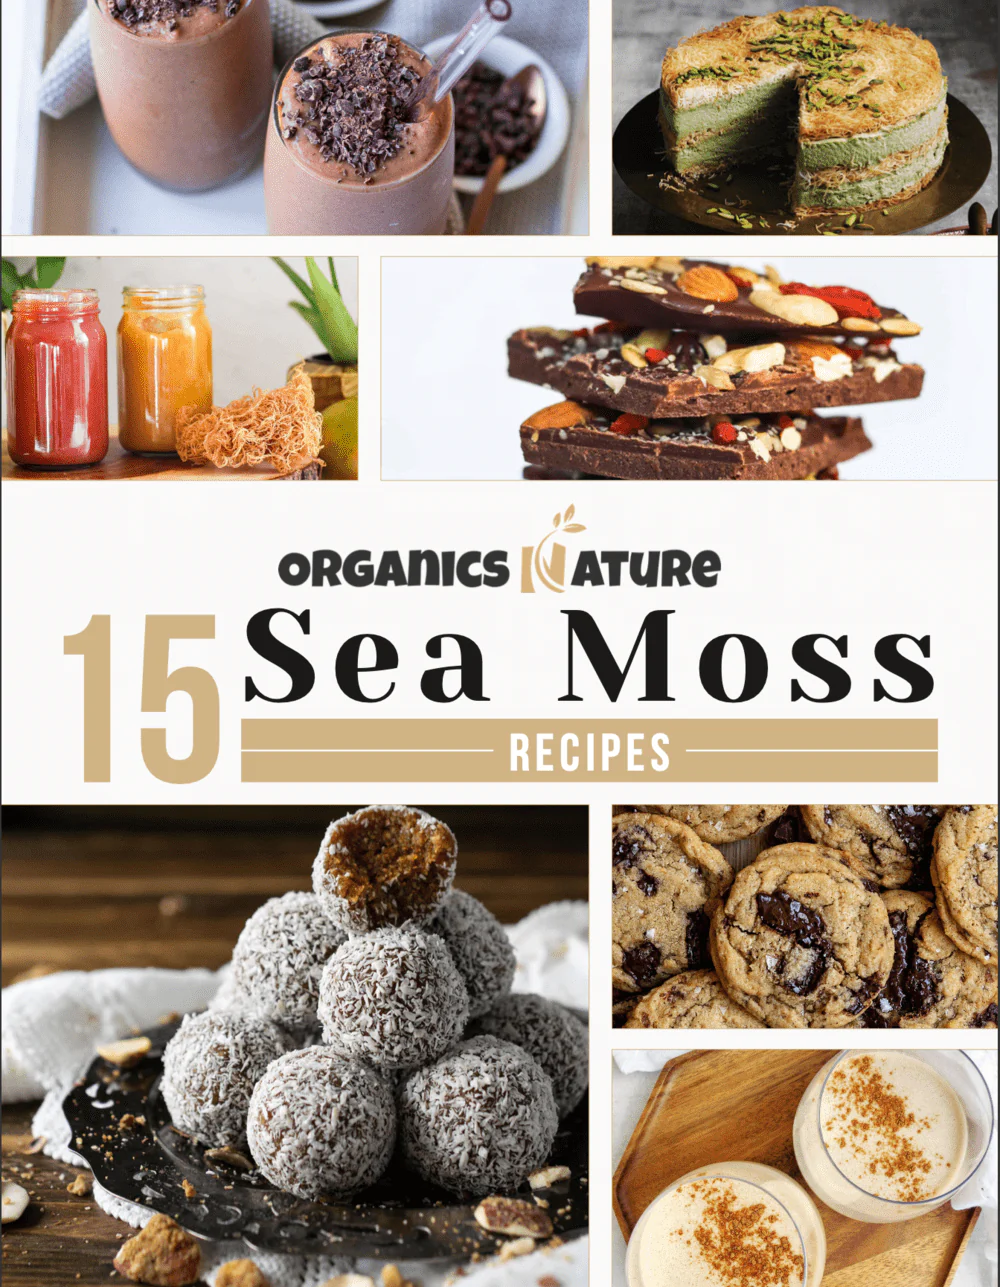 sea moss uses and recipes